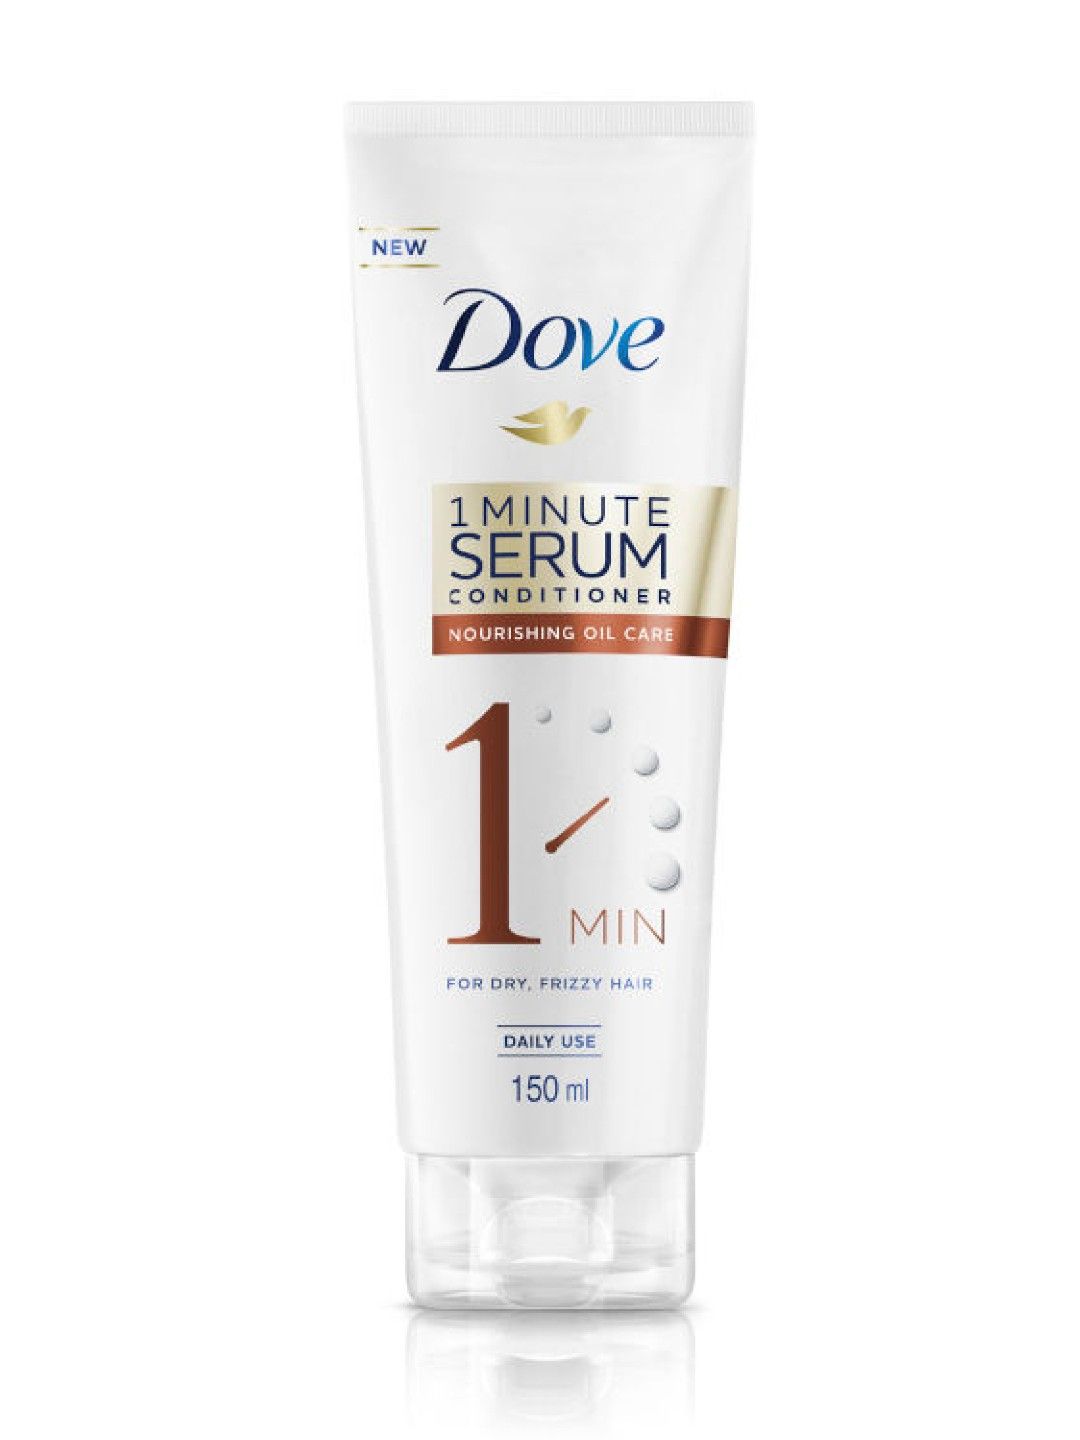 Dove 1 Minute Serum Conditioner Nourishing Oil Care (150ml)